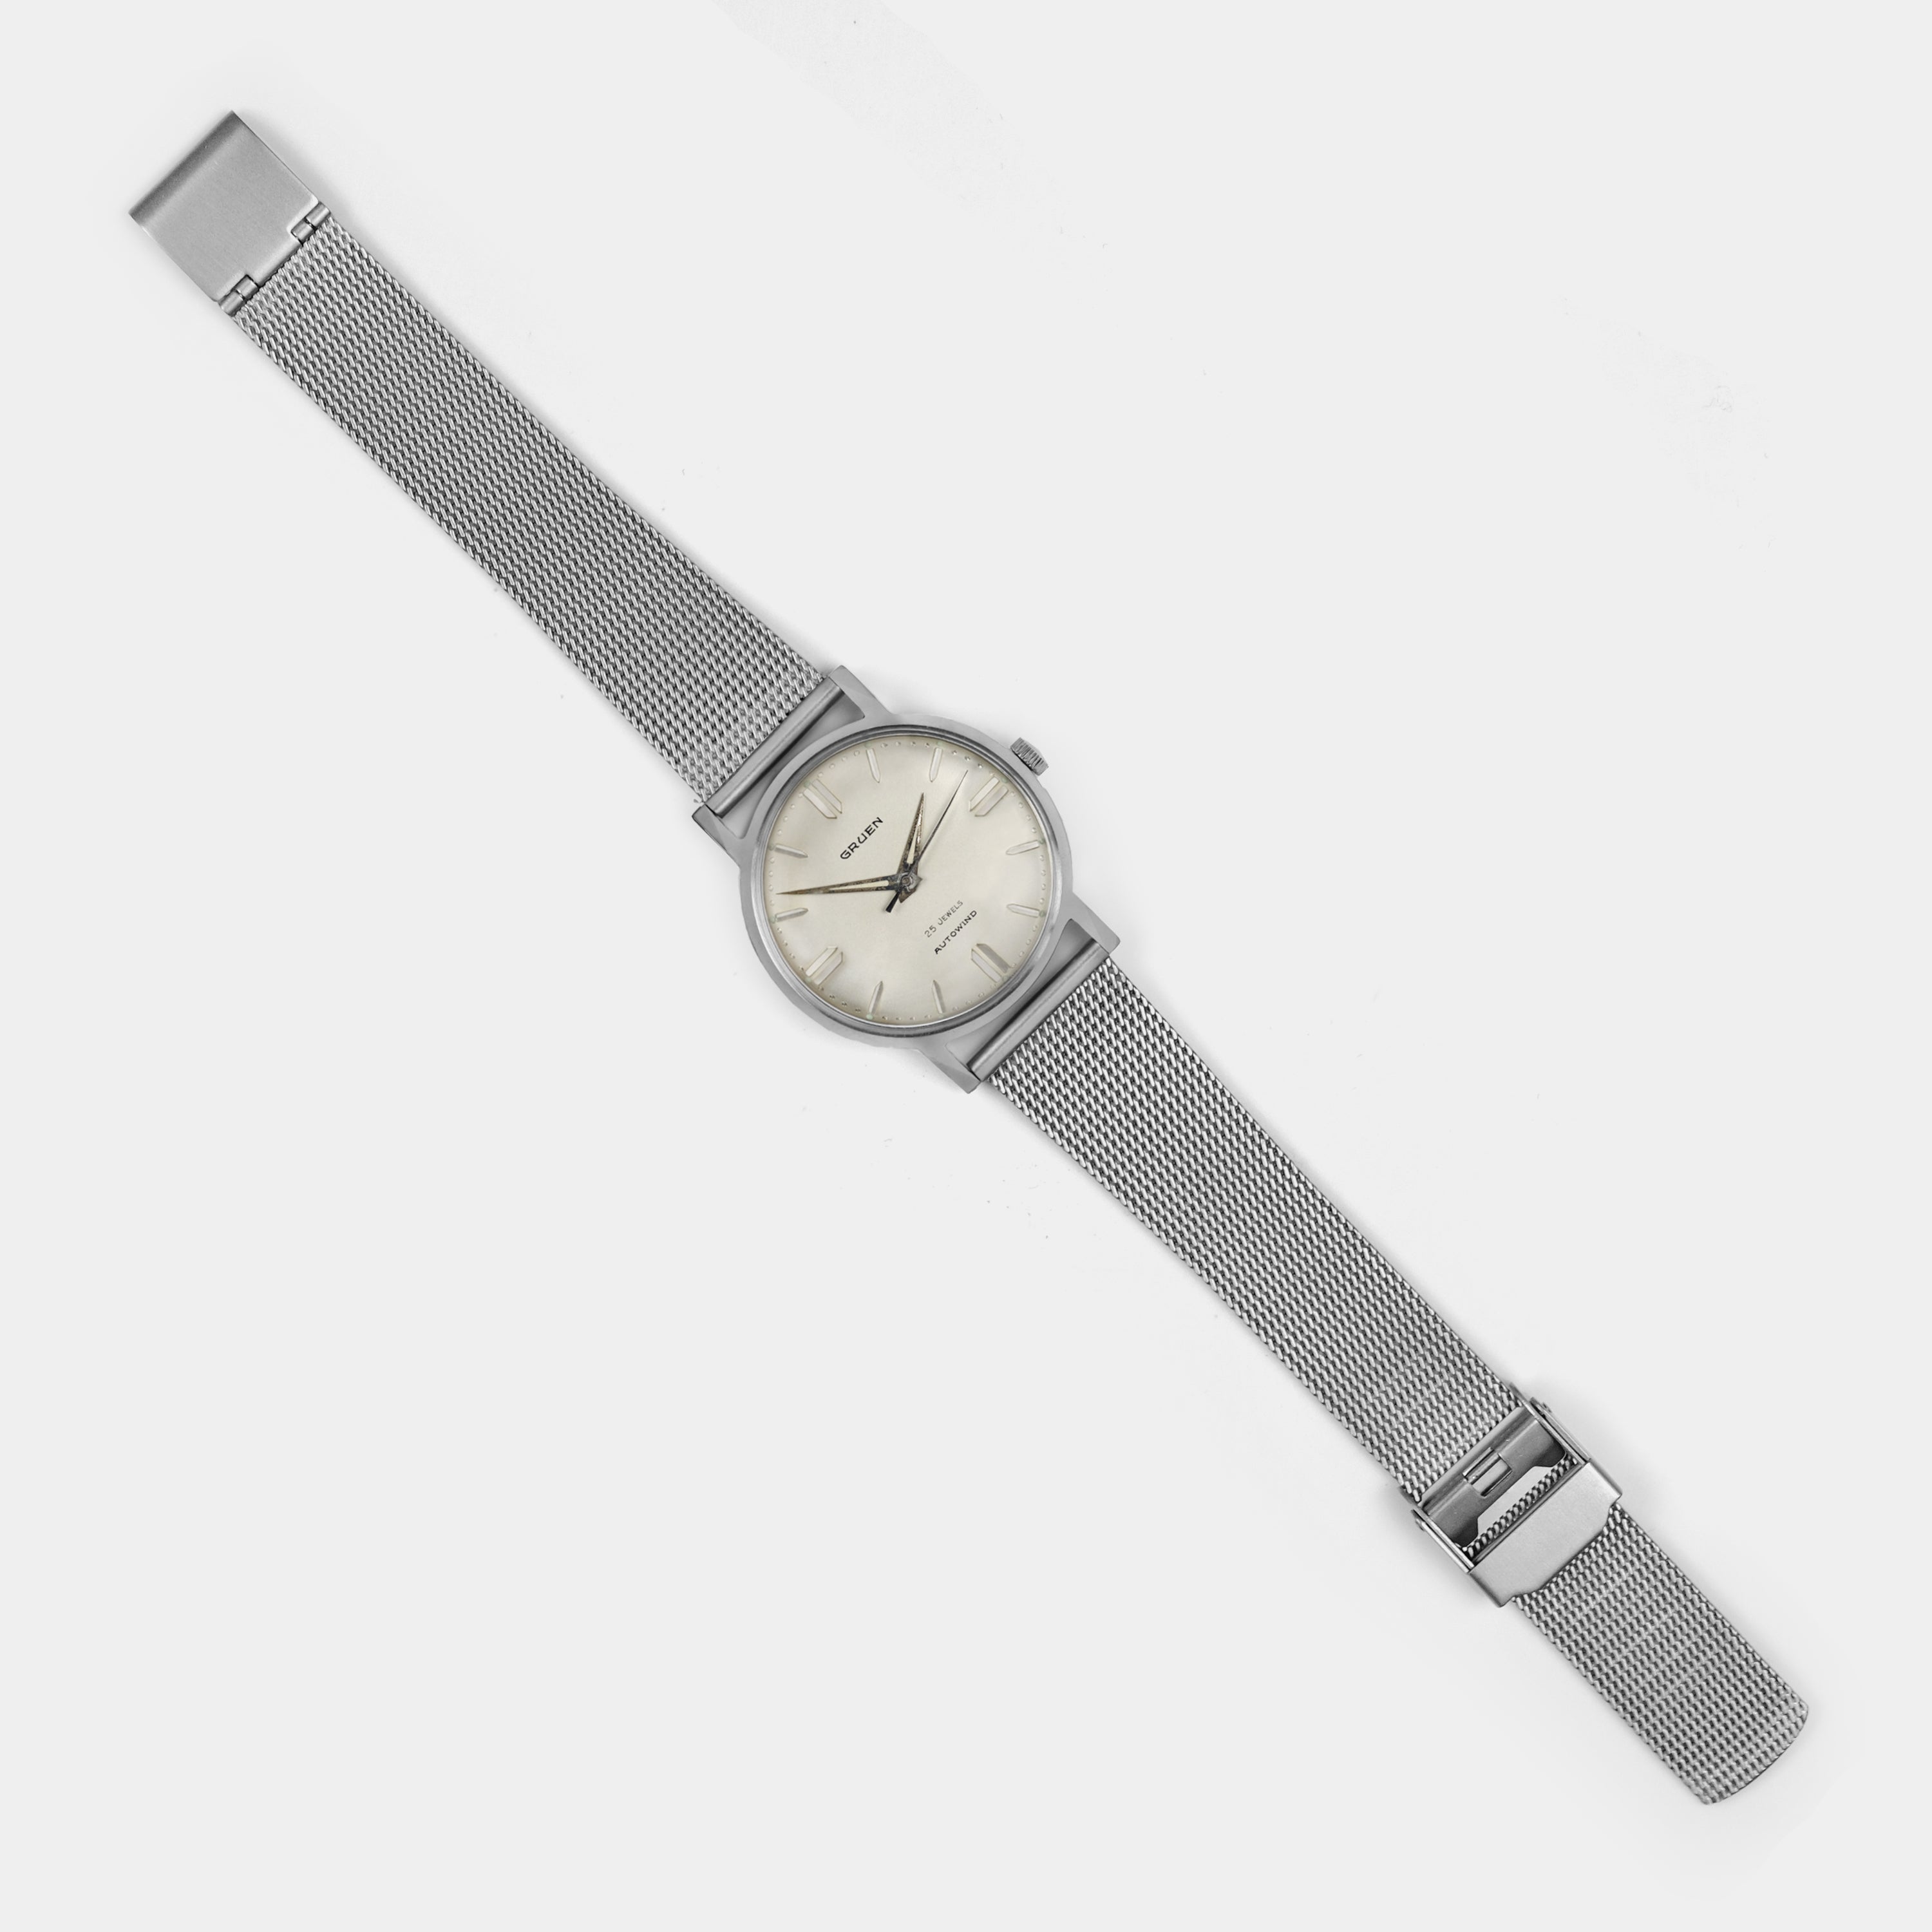 Gruen Autowind (25 Jewels) Wristwatch